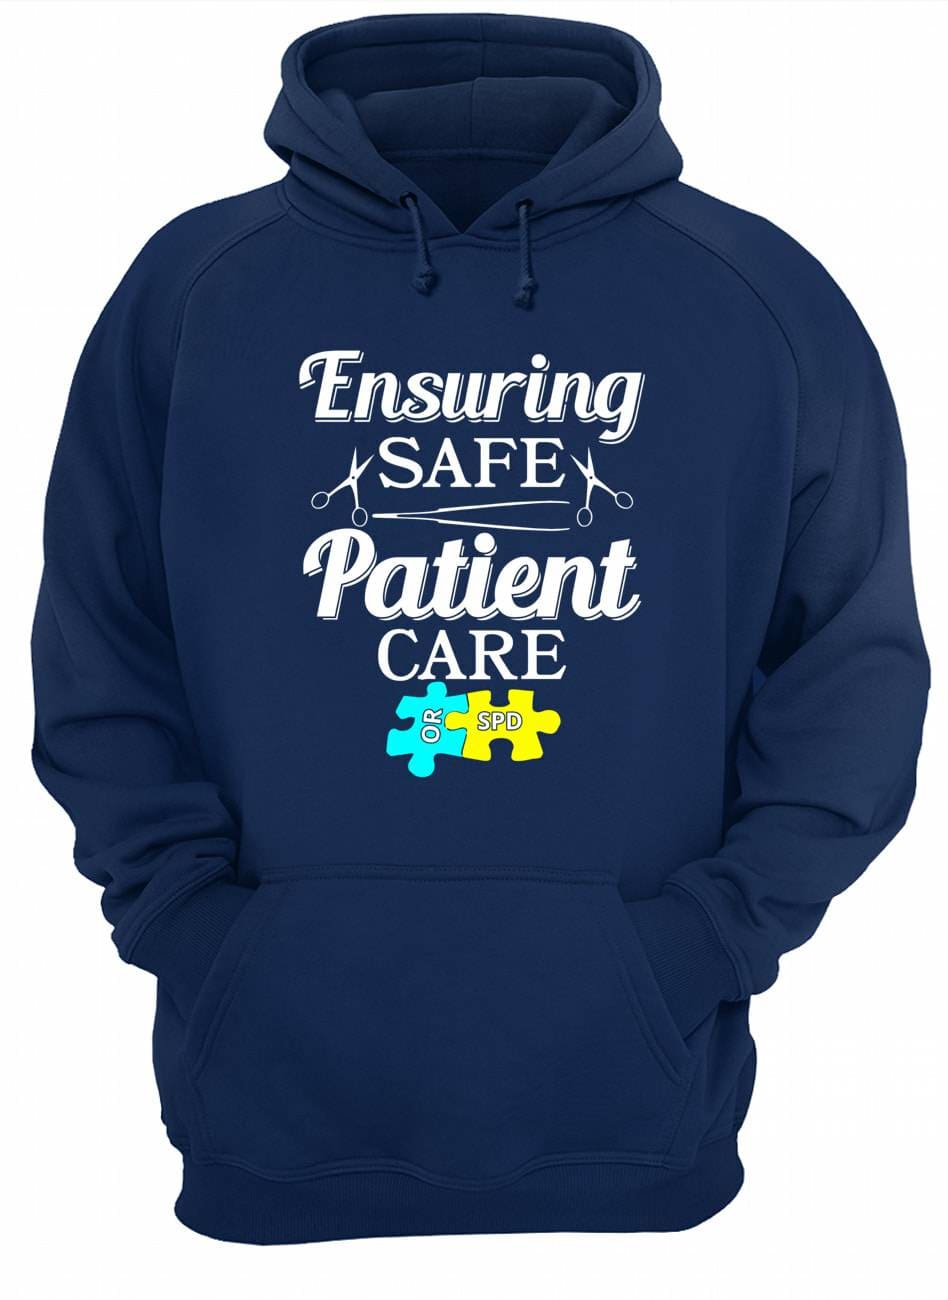 Unsuring safe patient care - Autism awareness T-shirt, be patient with autistic